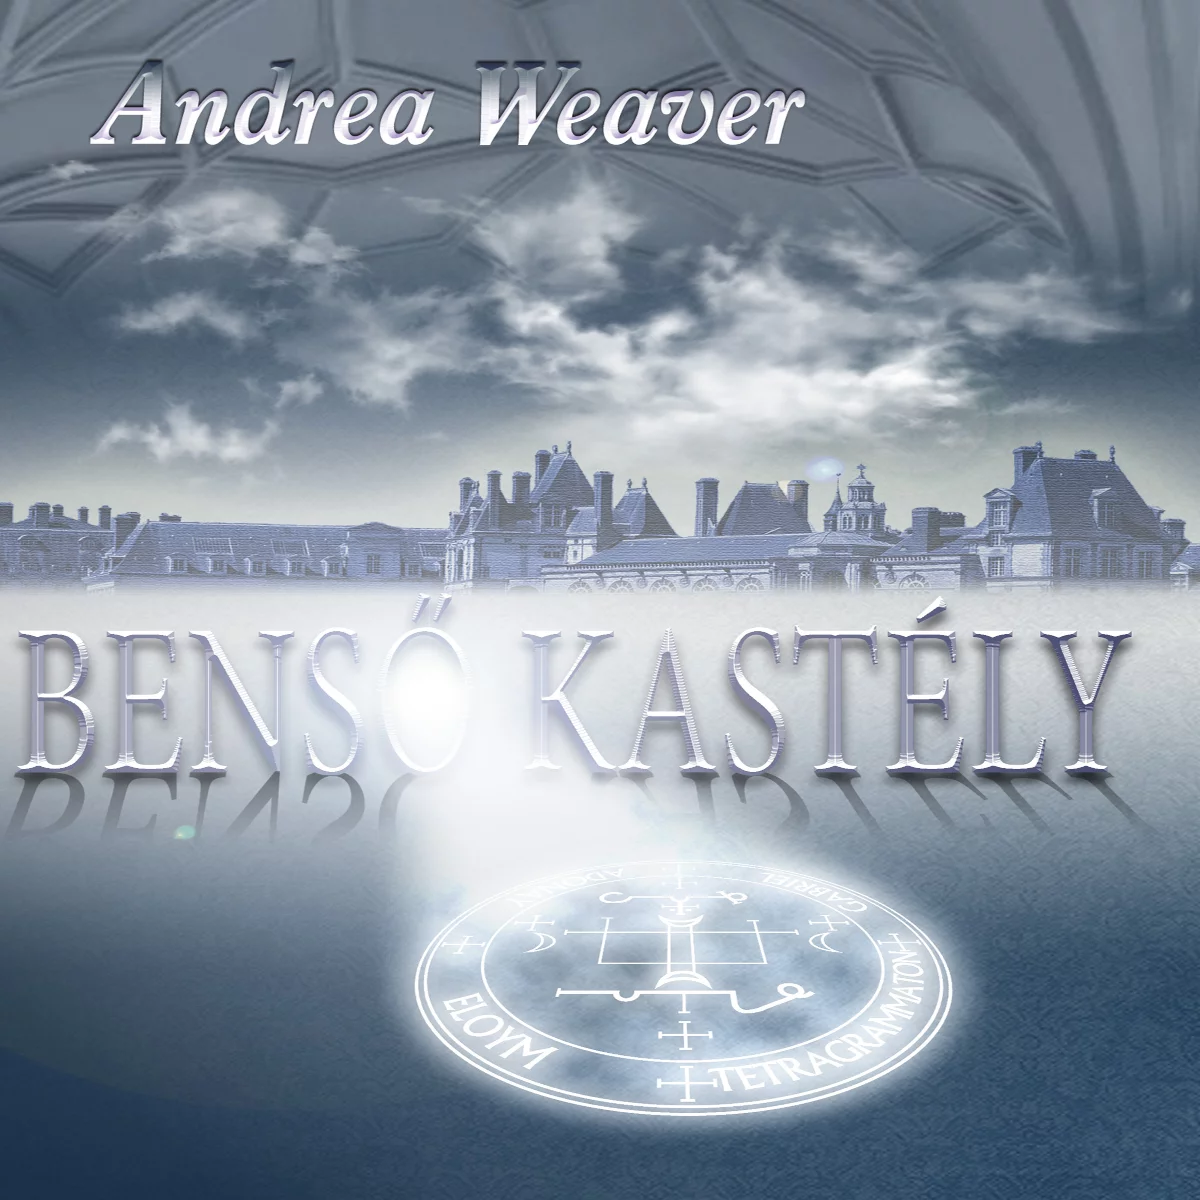 Andrea Weaver: Benső kastély